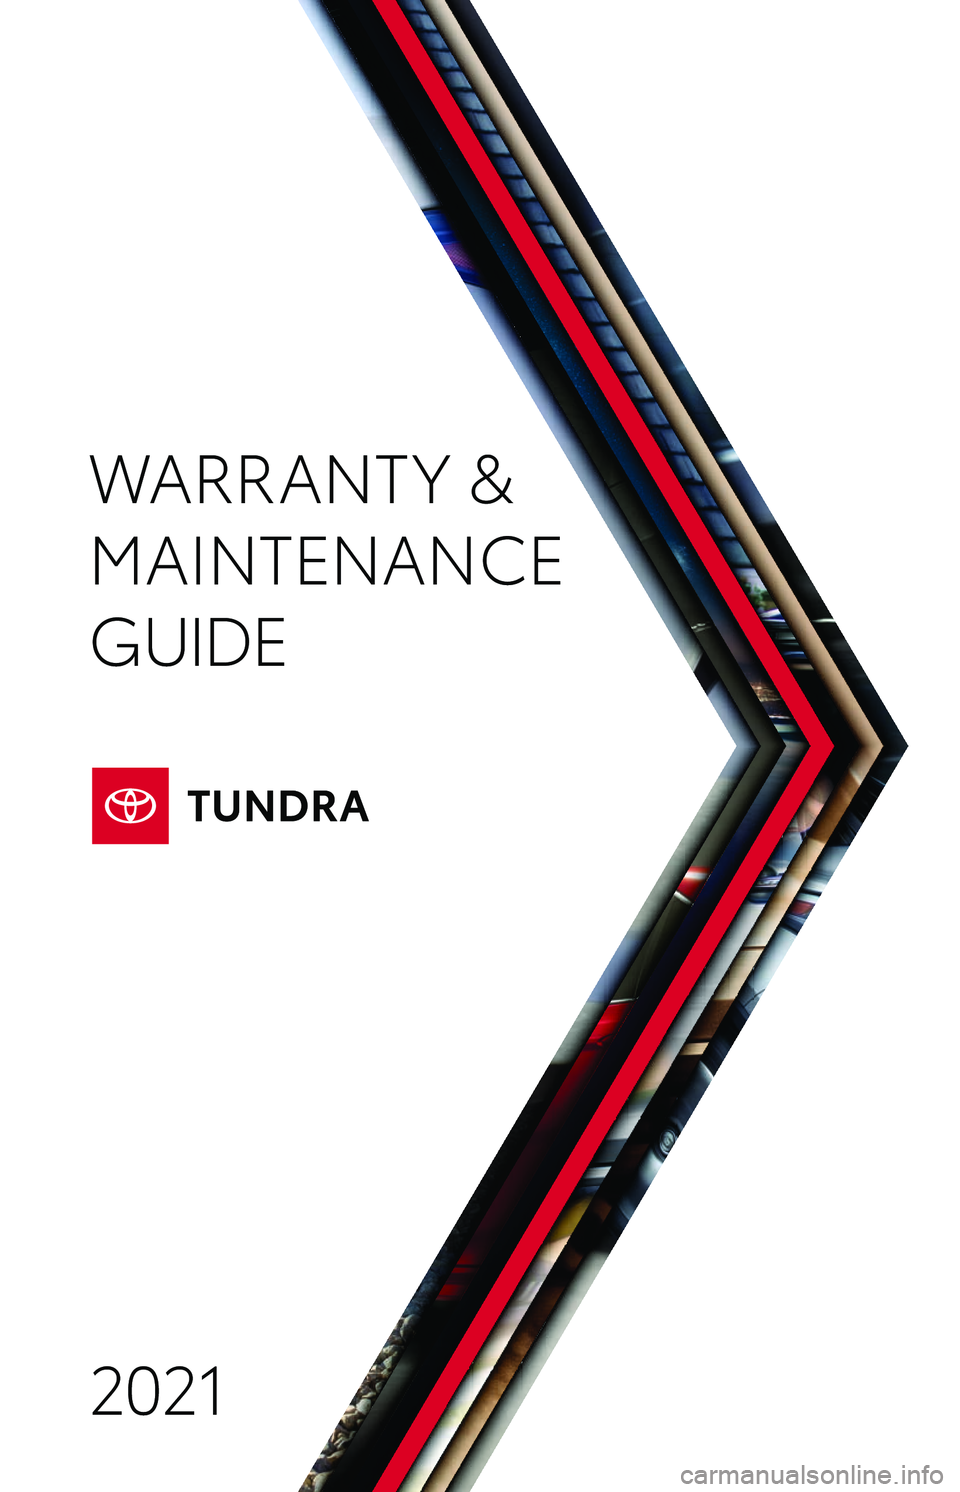 TOYOTA TUNDRA 2021  Warranties & Maintenance Guides (in English) Warranty & Maintenance  Guide 2021
toyota\fcom
2021 WARRANT Y &
MAINTENANCE 
GUIDEPrinted  in U. S. A .  6/20 
19 -T C S -14 212 